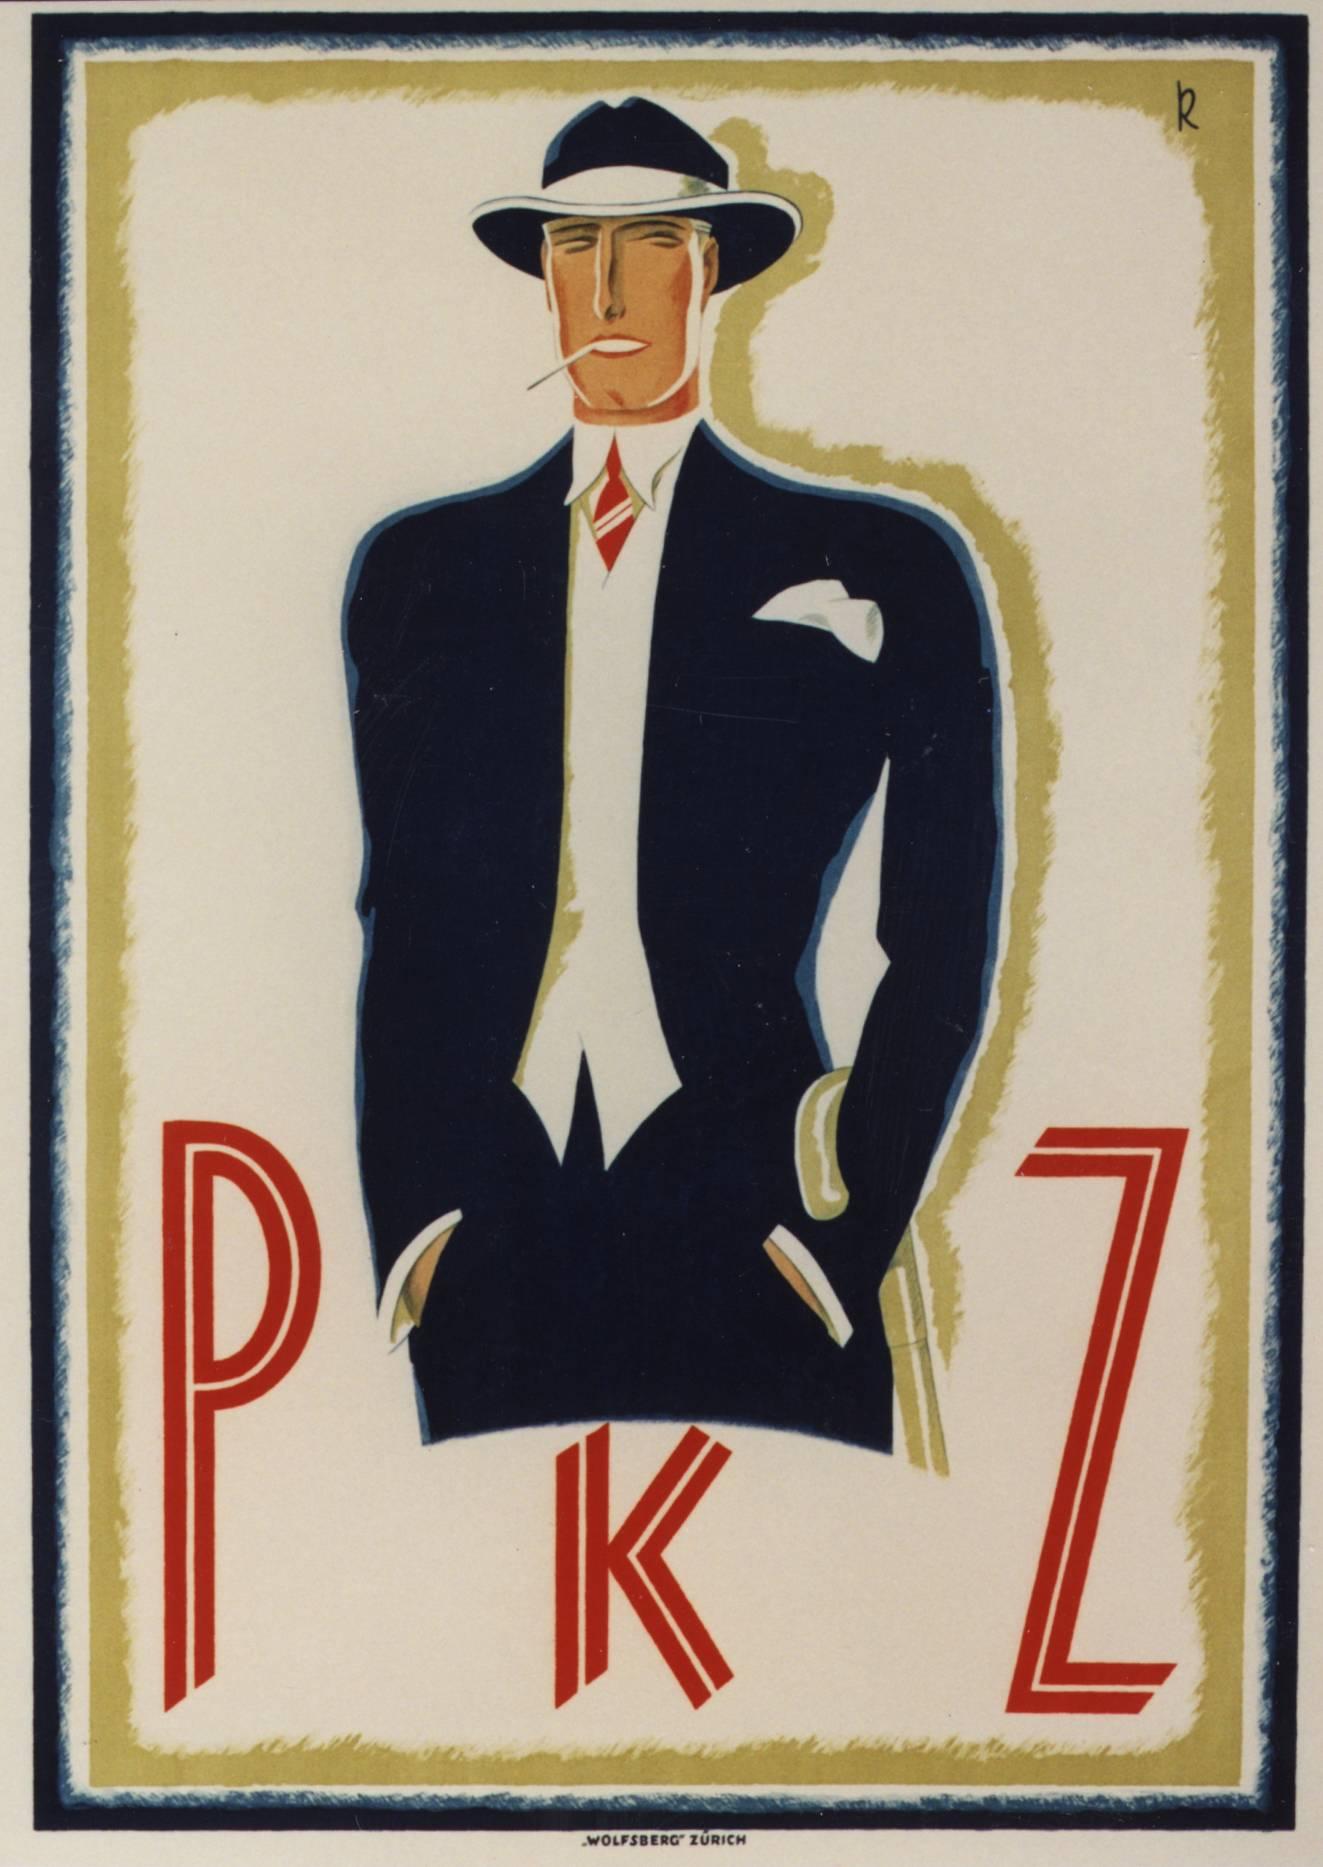 Ernst A Kretchmamm Figurative Print - PKZ [Man in Blue Suit].